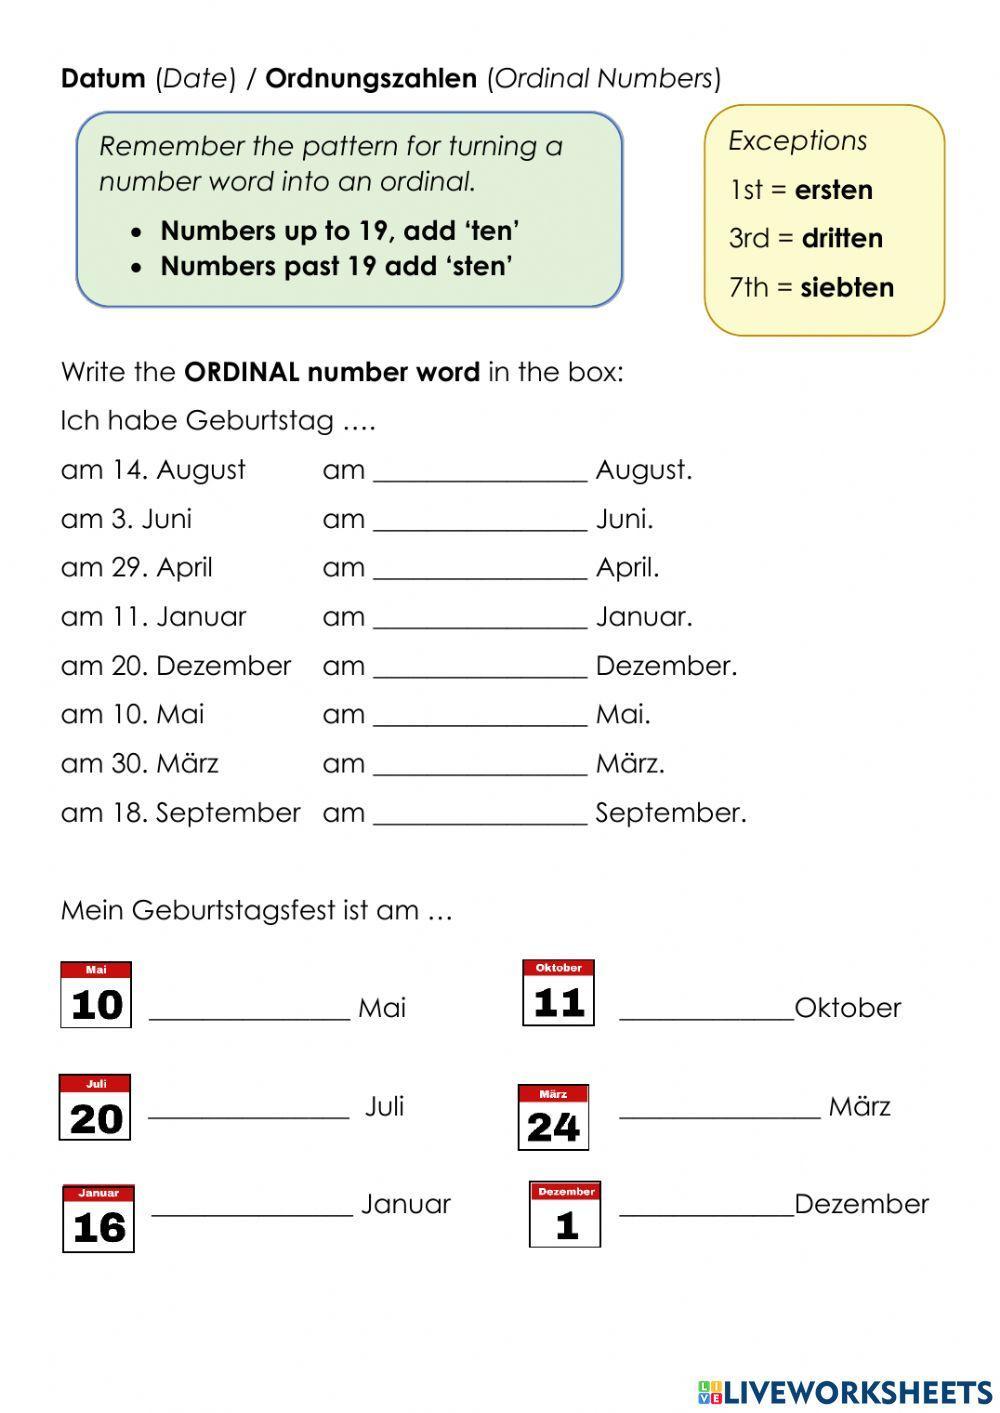 Ordnungszahlen - Ordinal Numbers